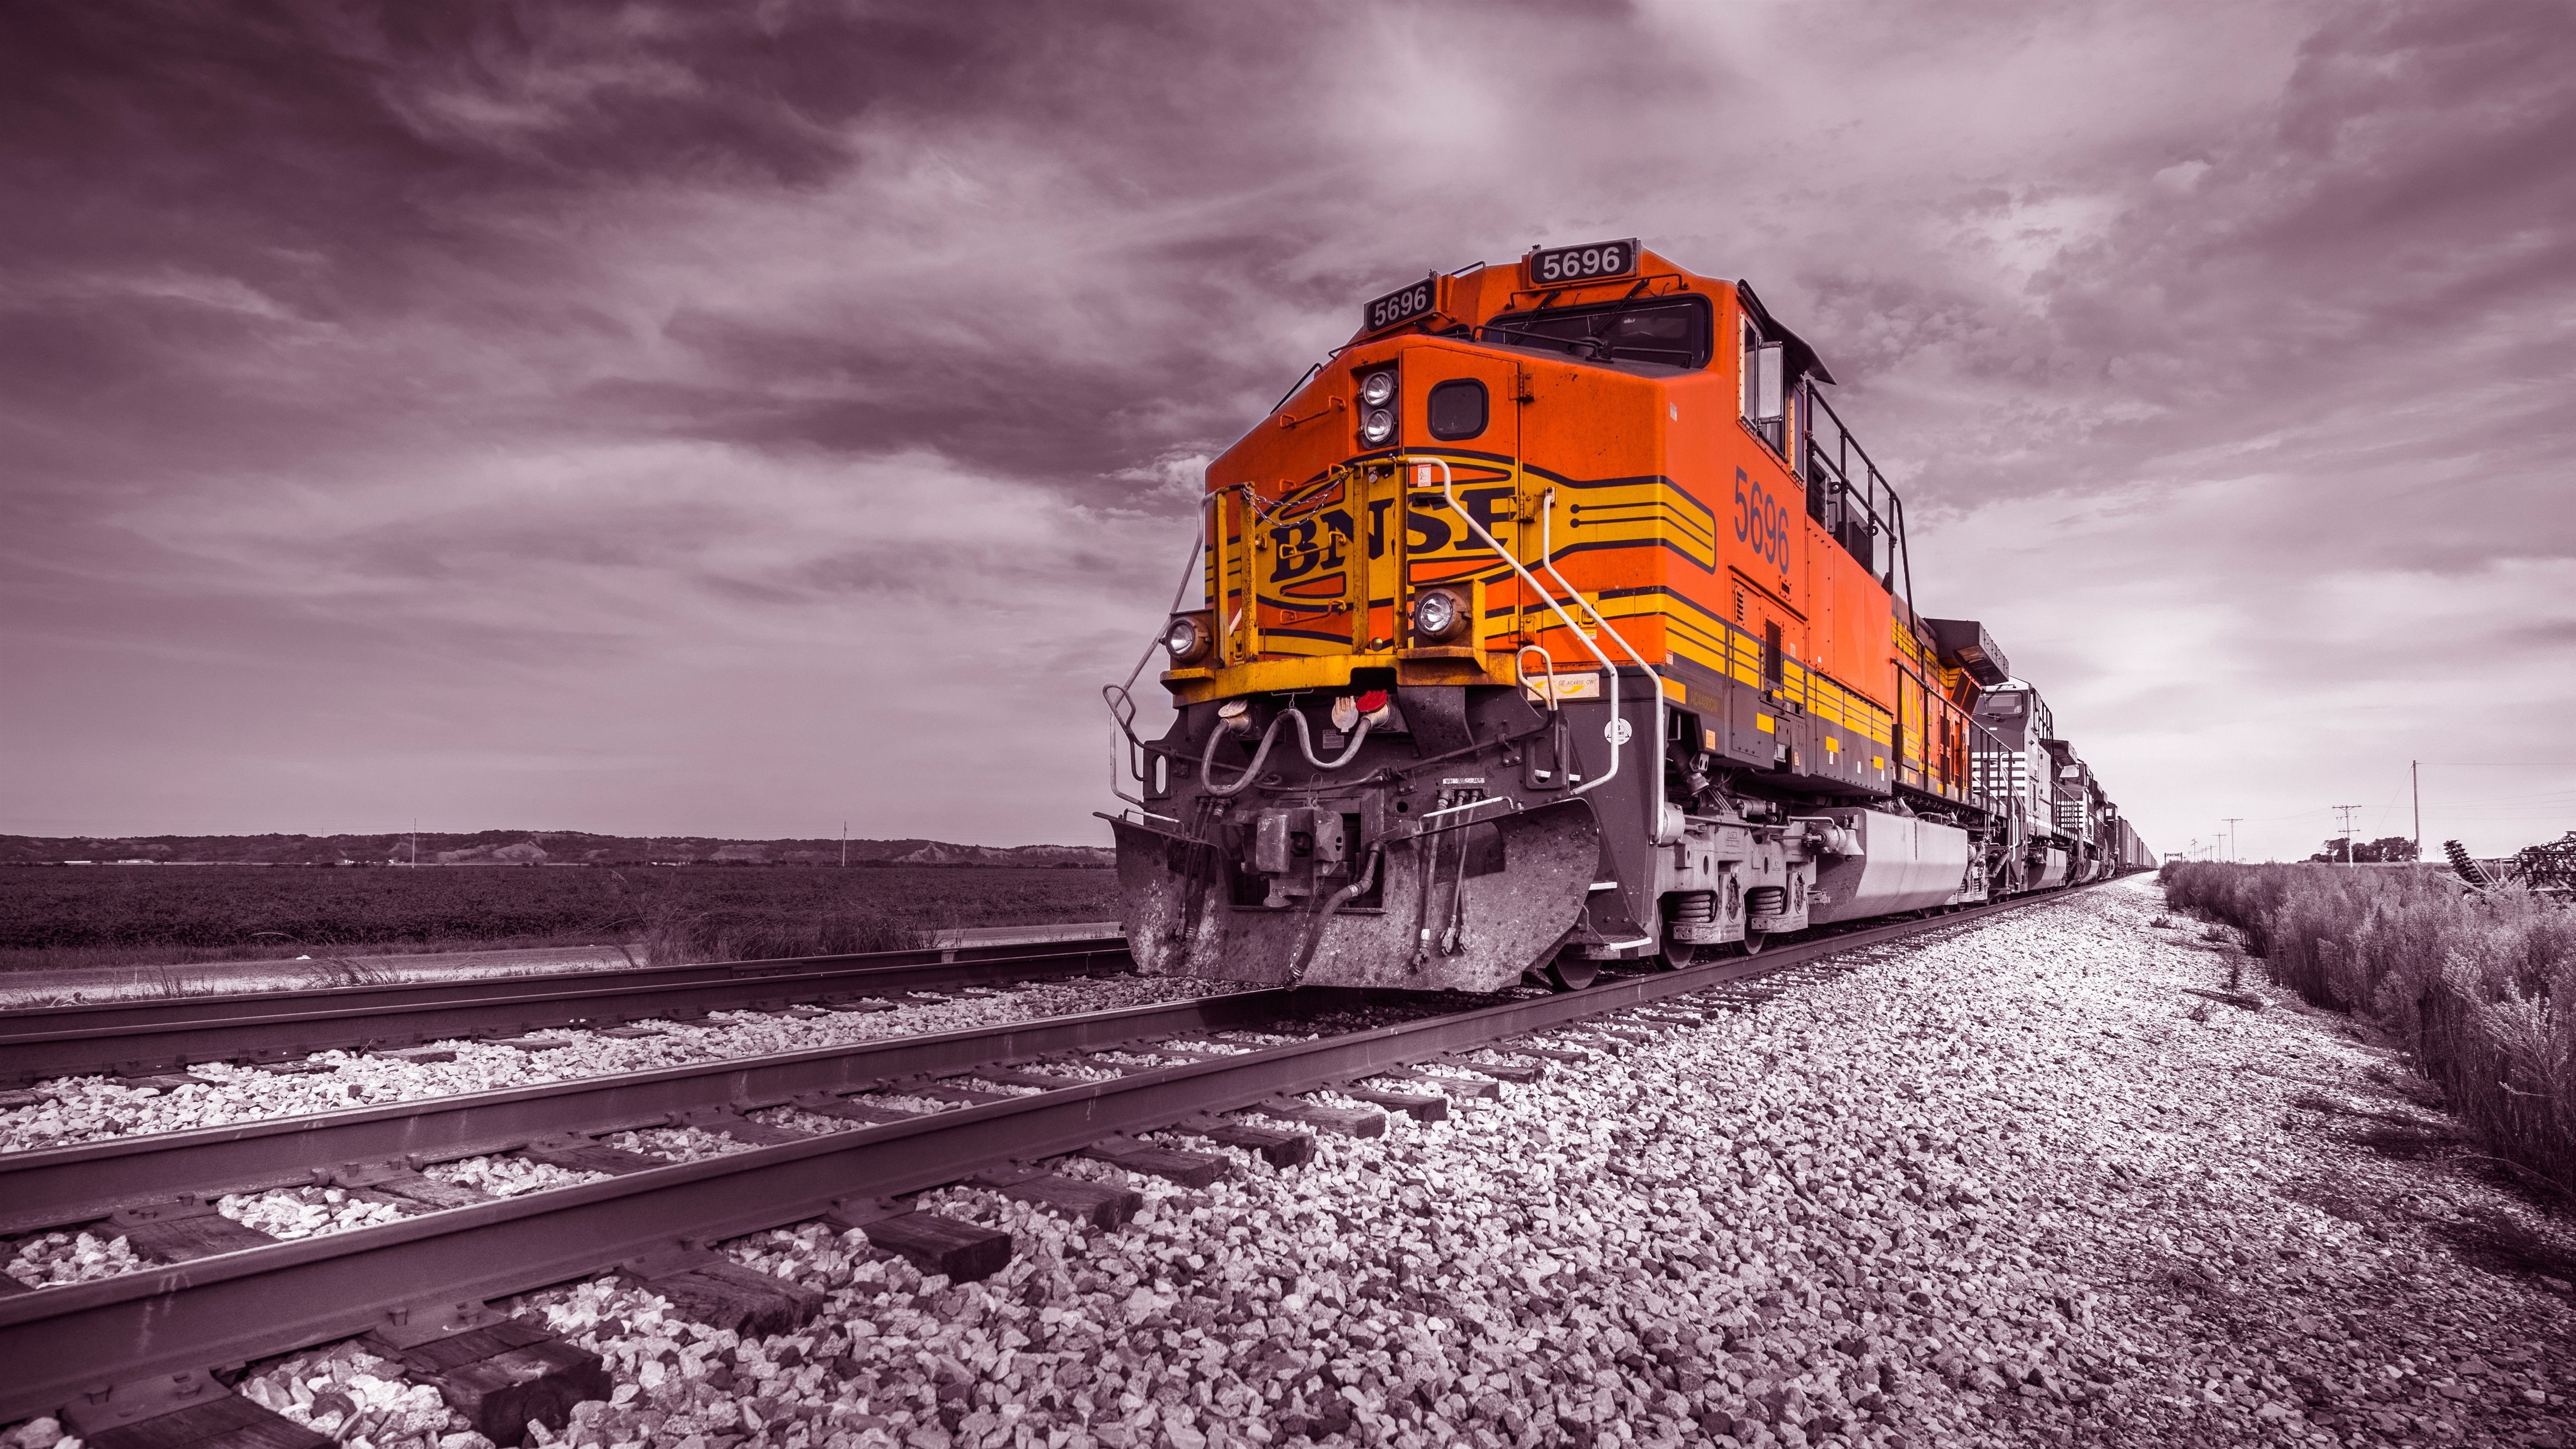 Wallpaper Train, railroad, rocks, clouds 5120x2880 UHD 5K Picture